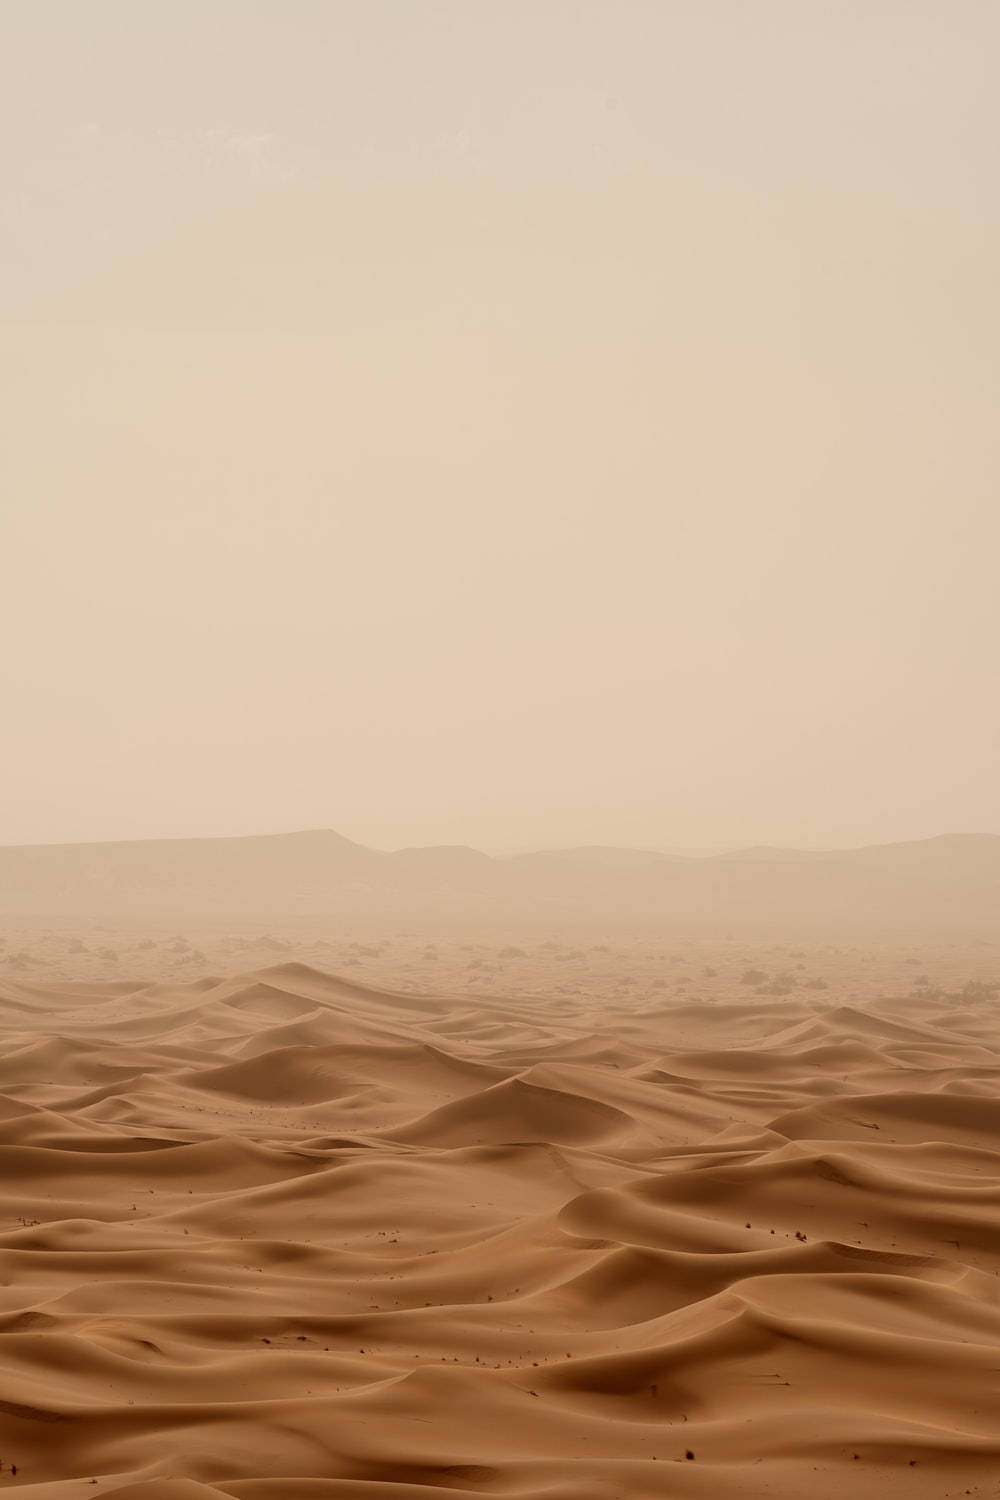 A desert landscape with sand dunes and a hazy sky - Desert